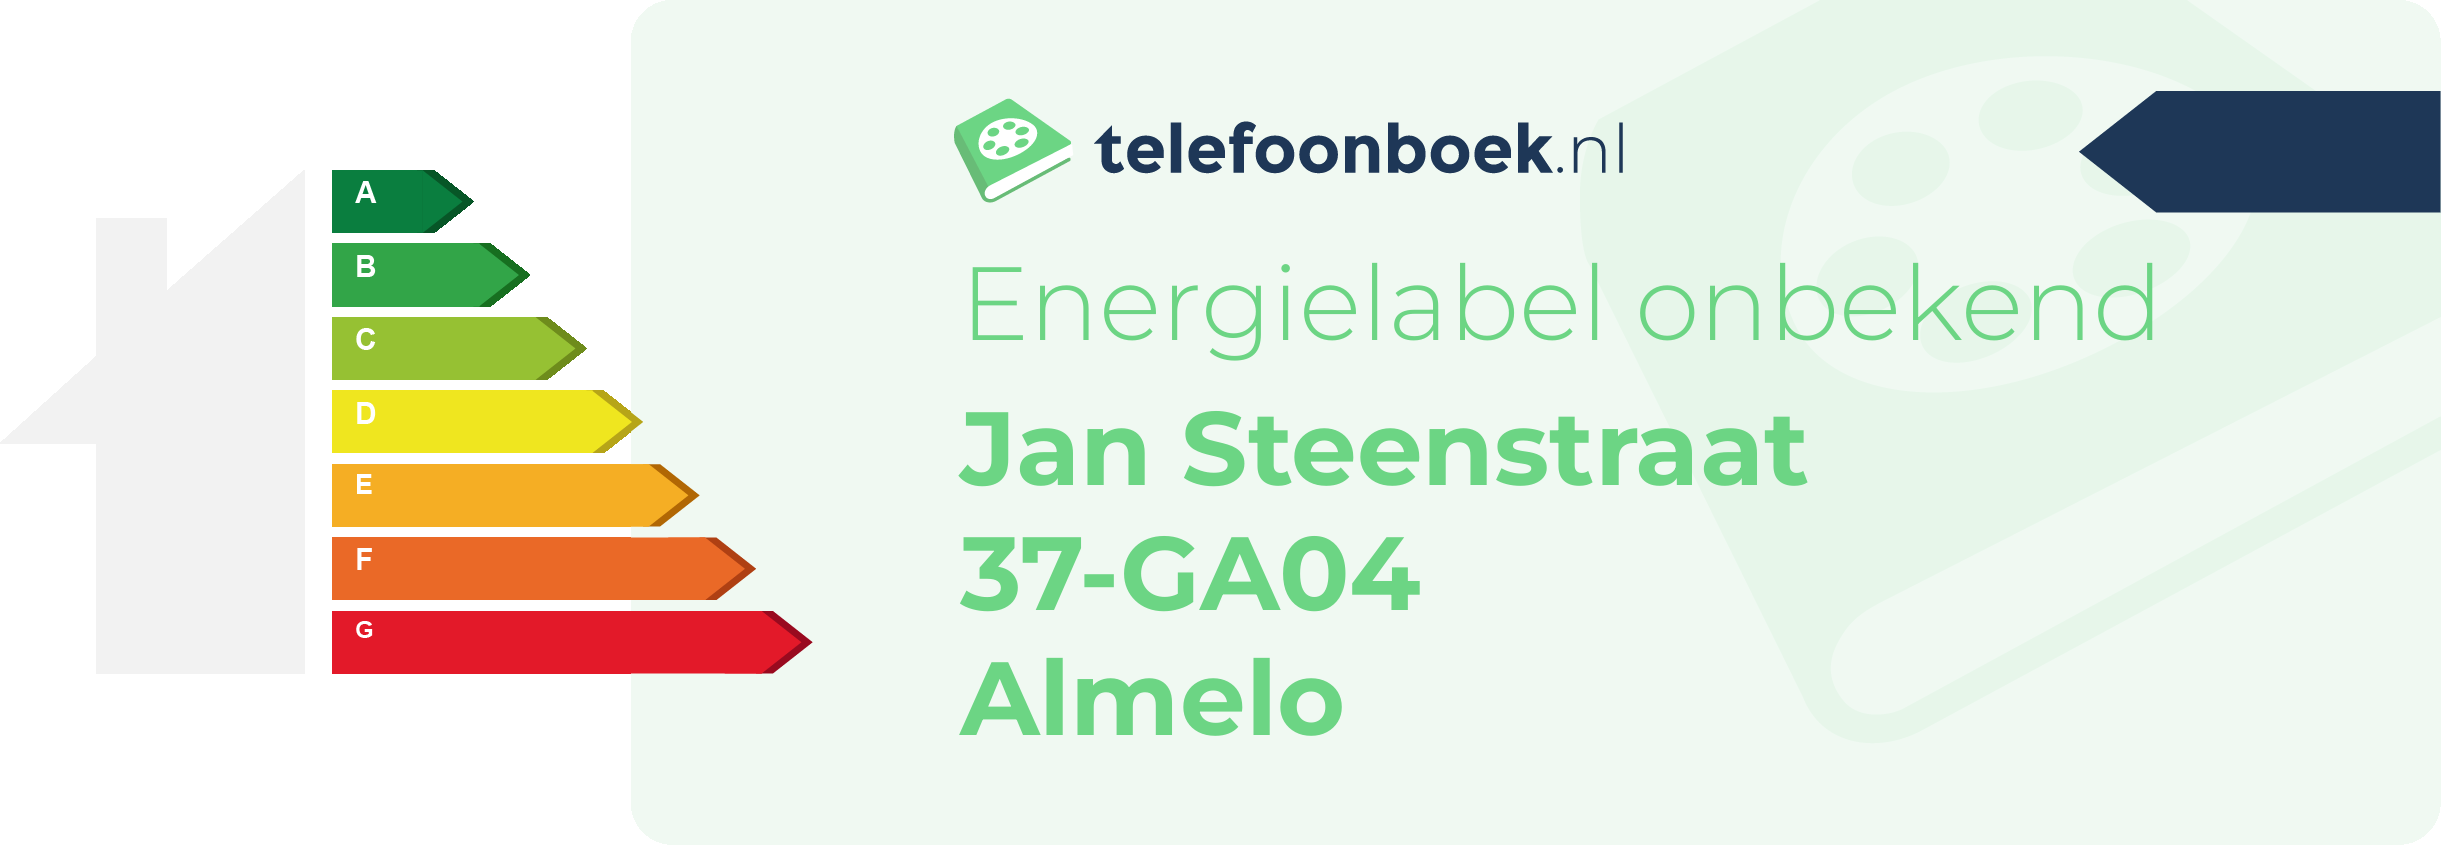 Energielabel Jan Steenstraat 37-GA04 Almelo